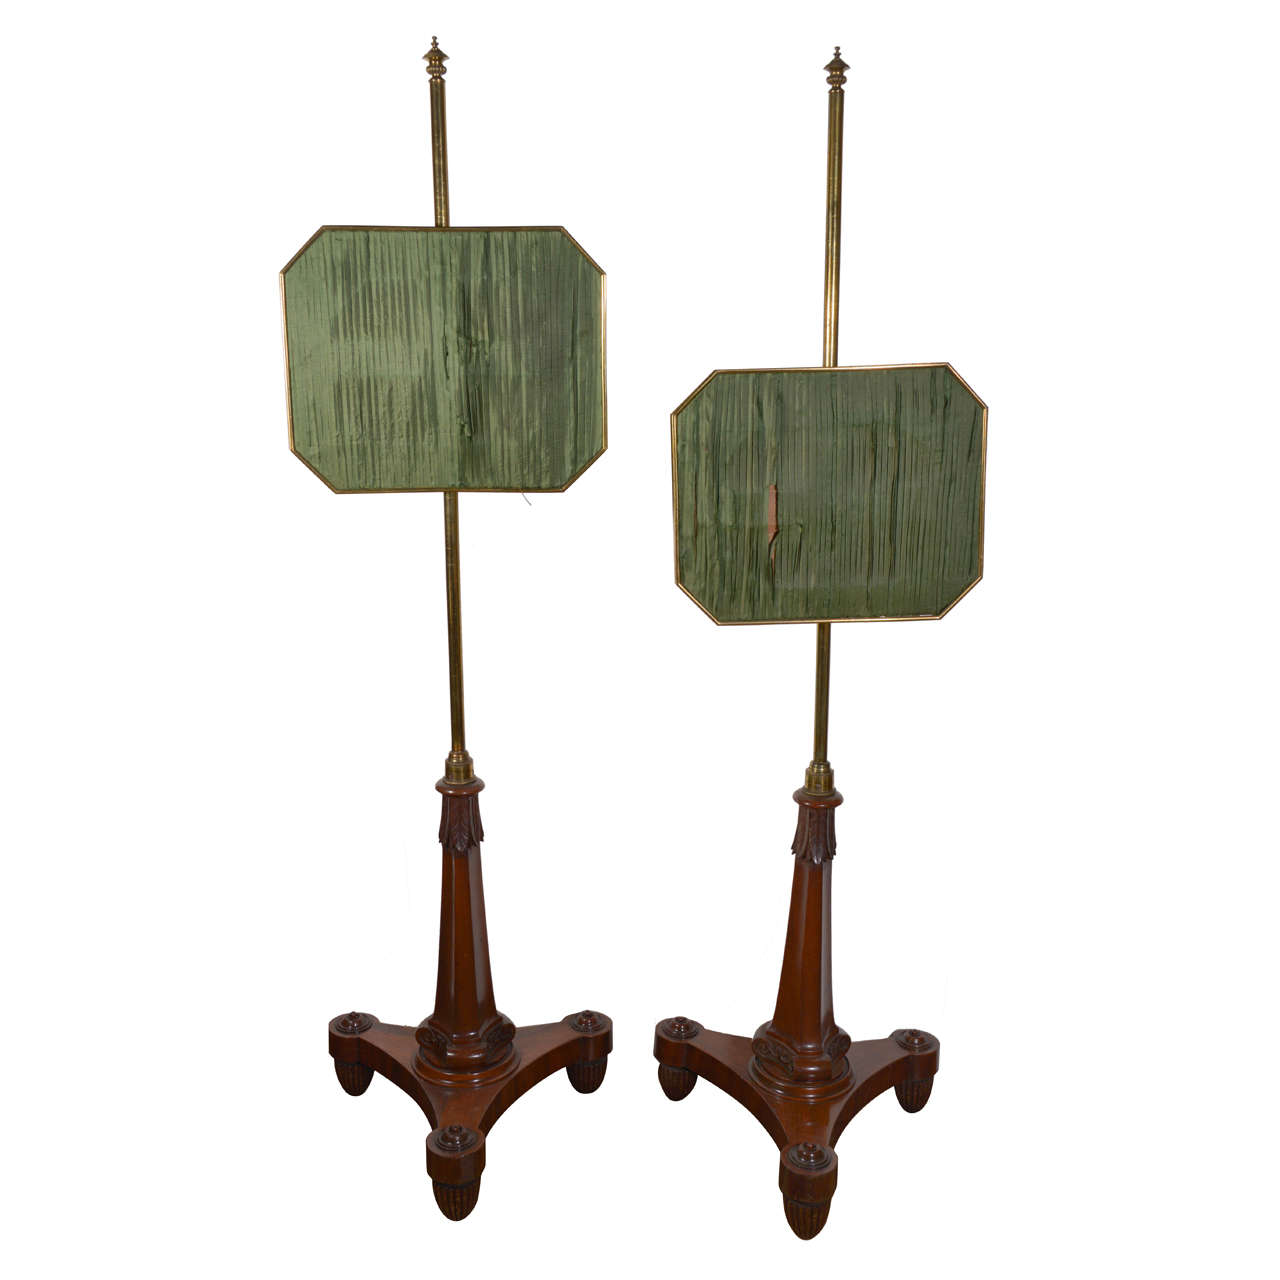 Pair of Regency Gilt-Brass Mounted Pole Screens